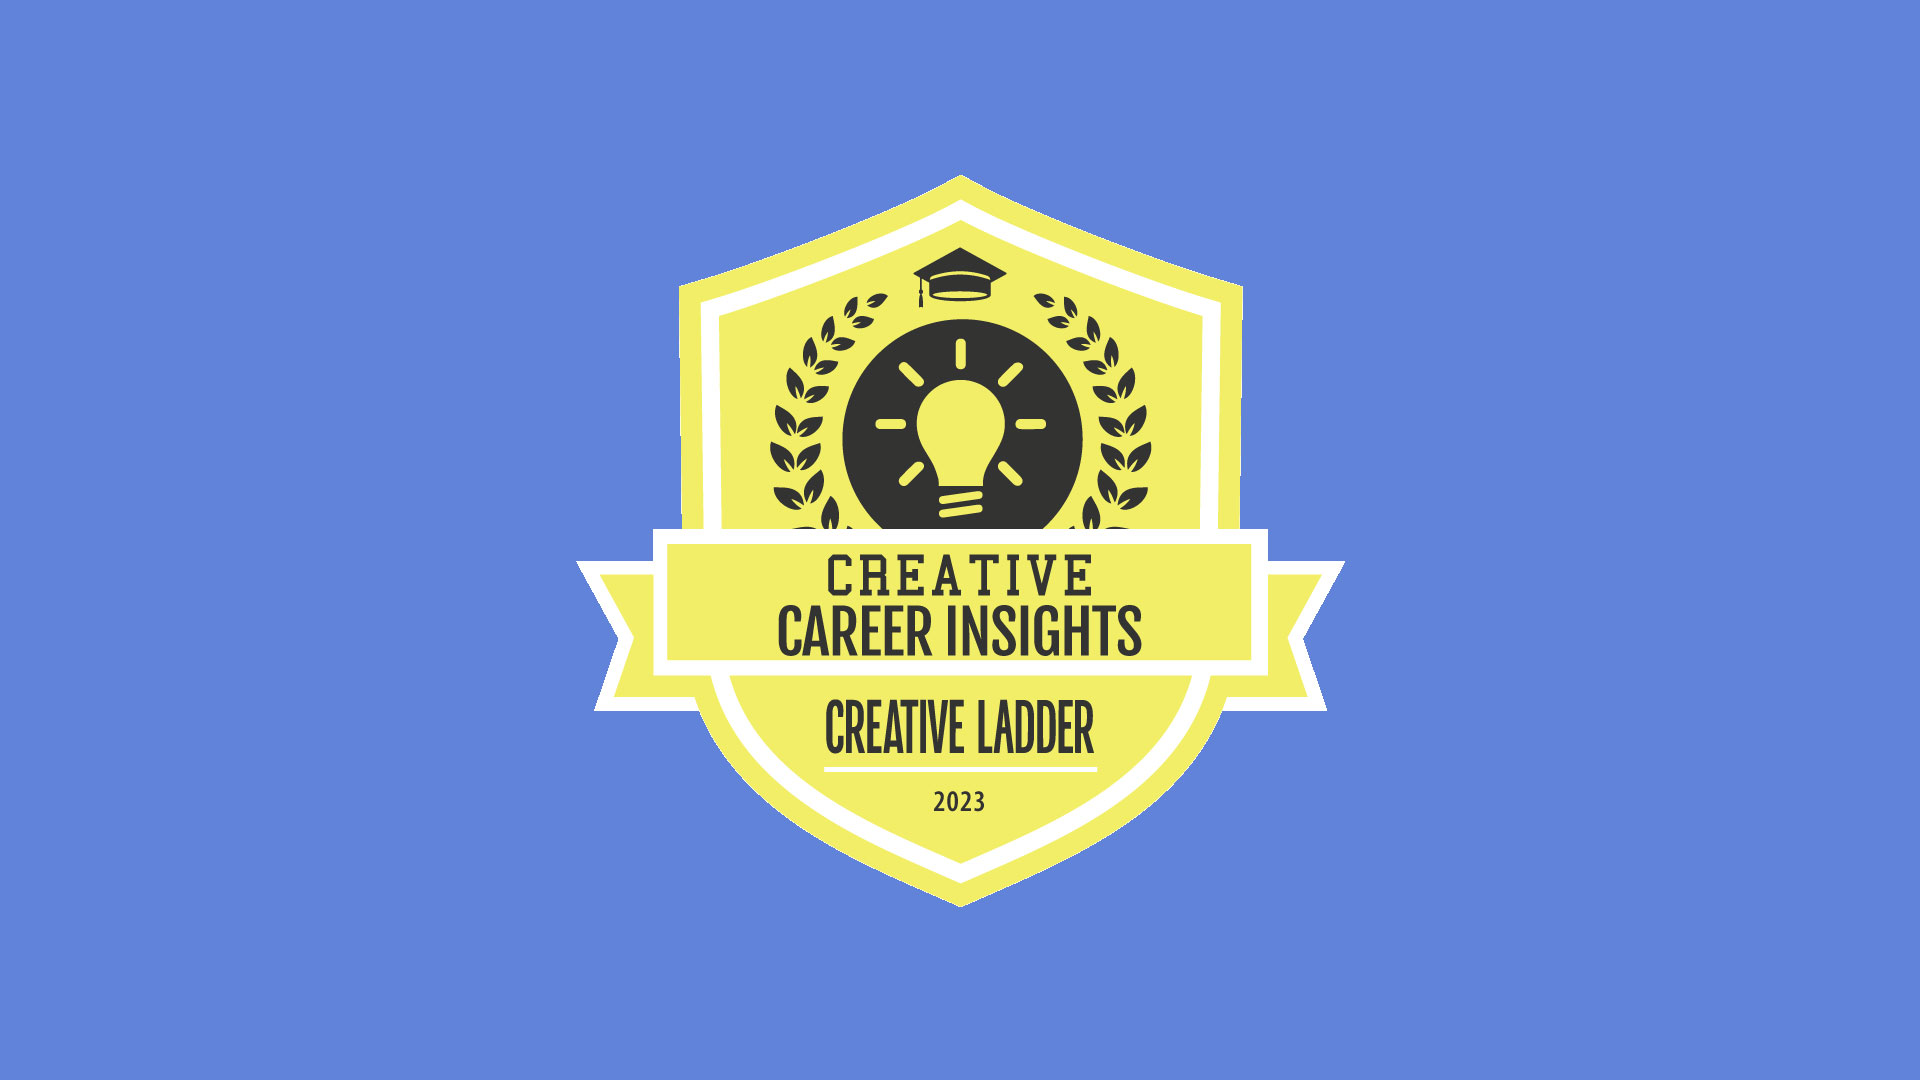 Creative career insights logo